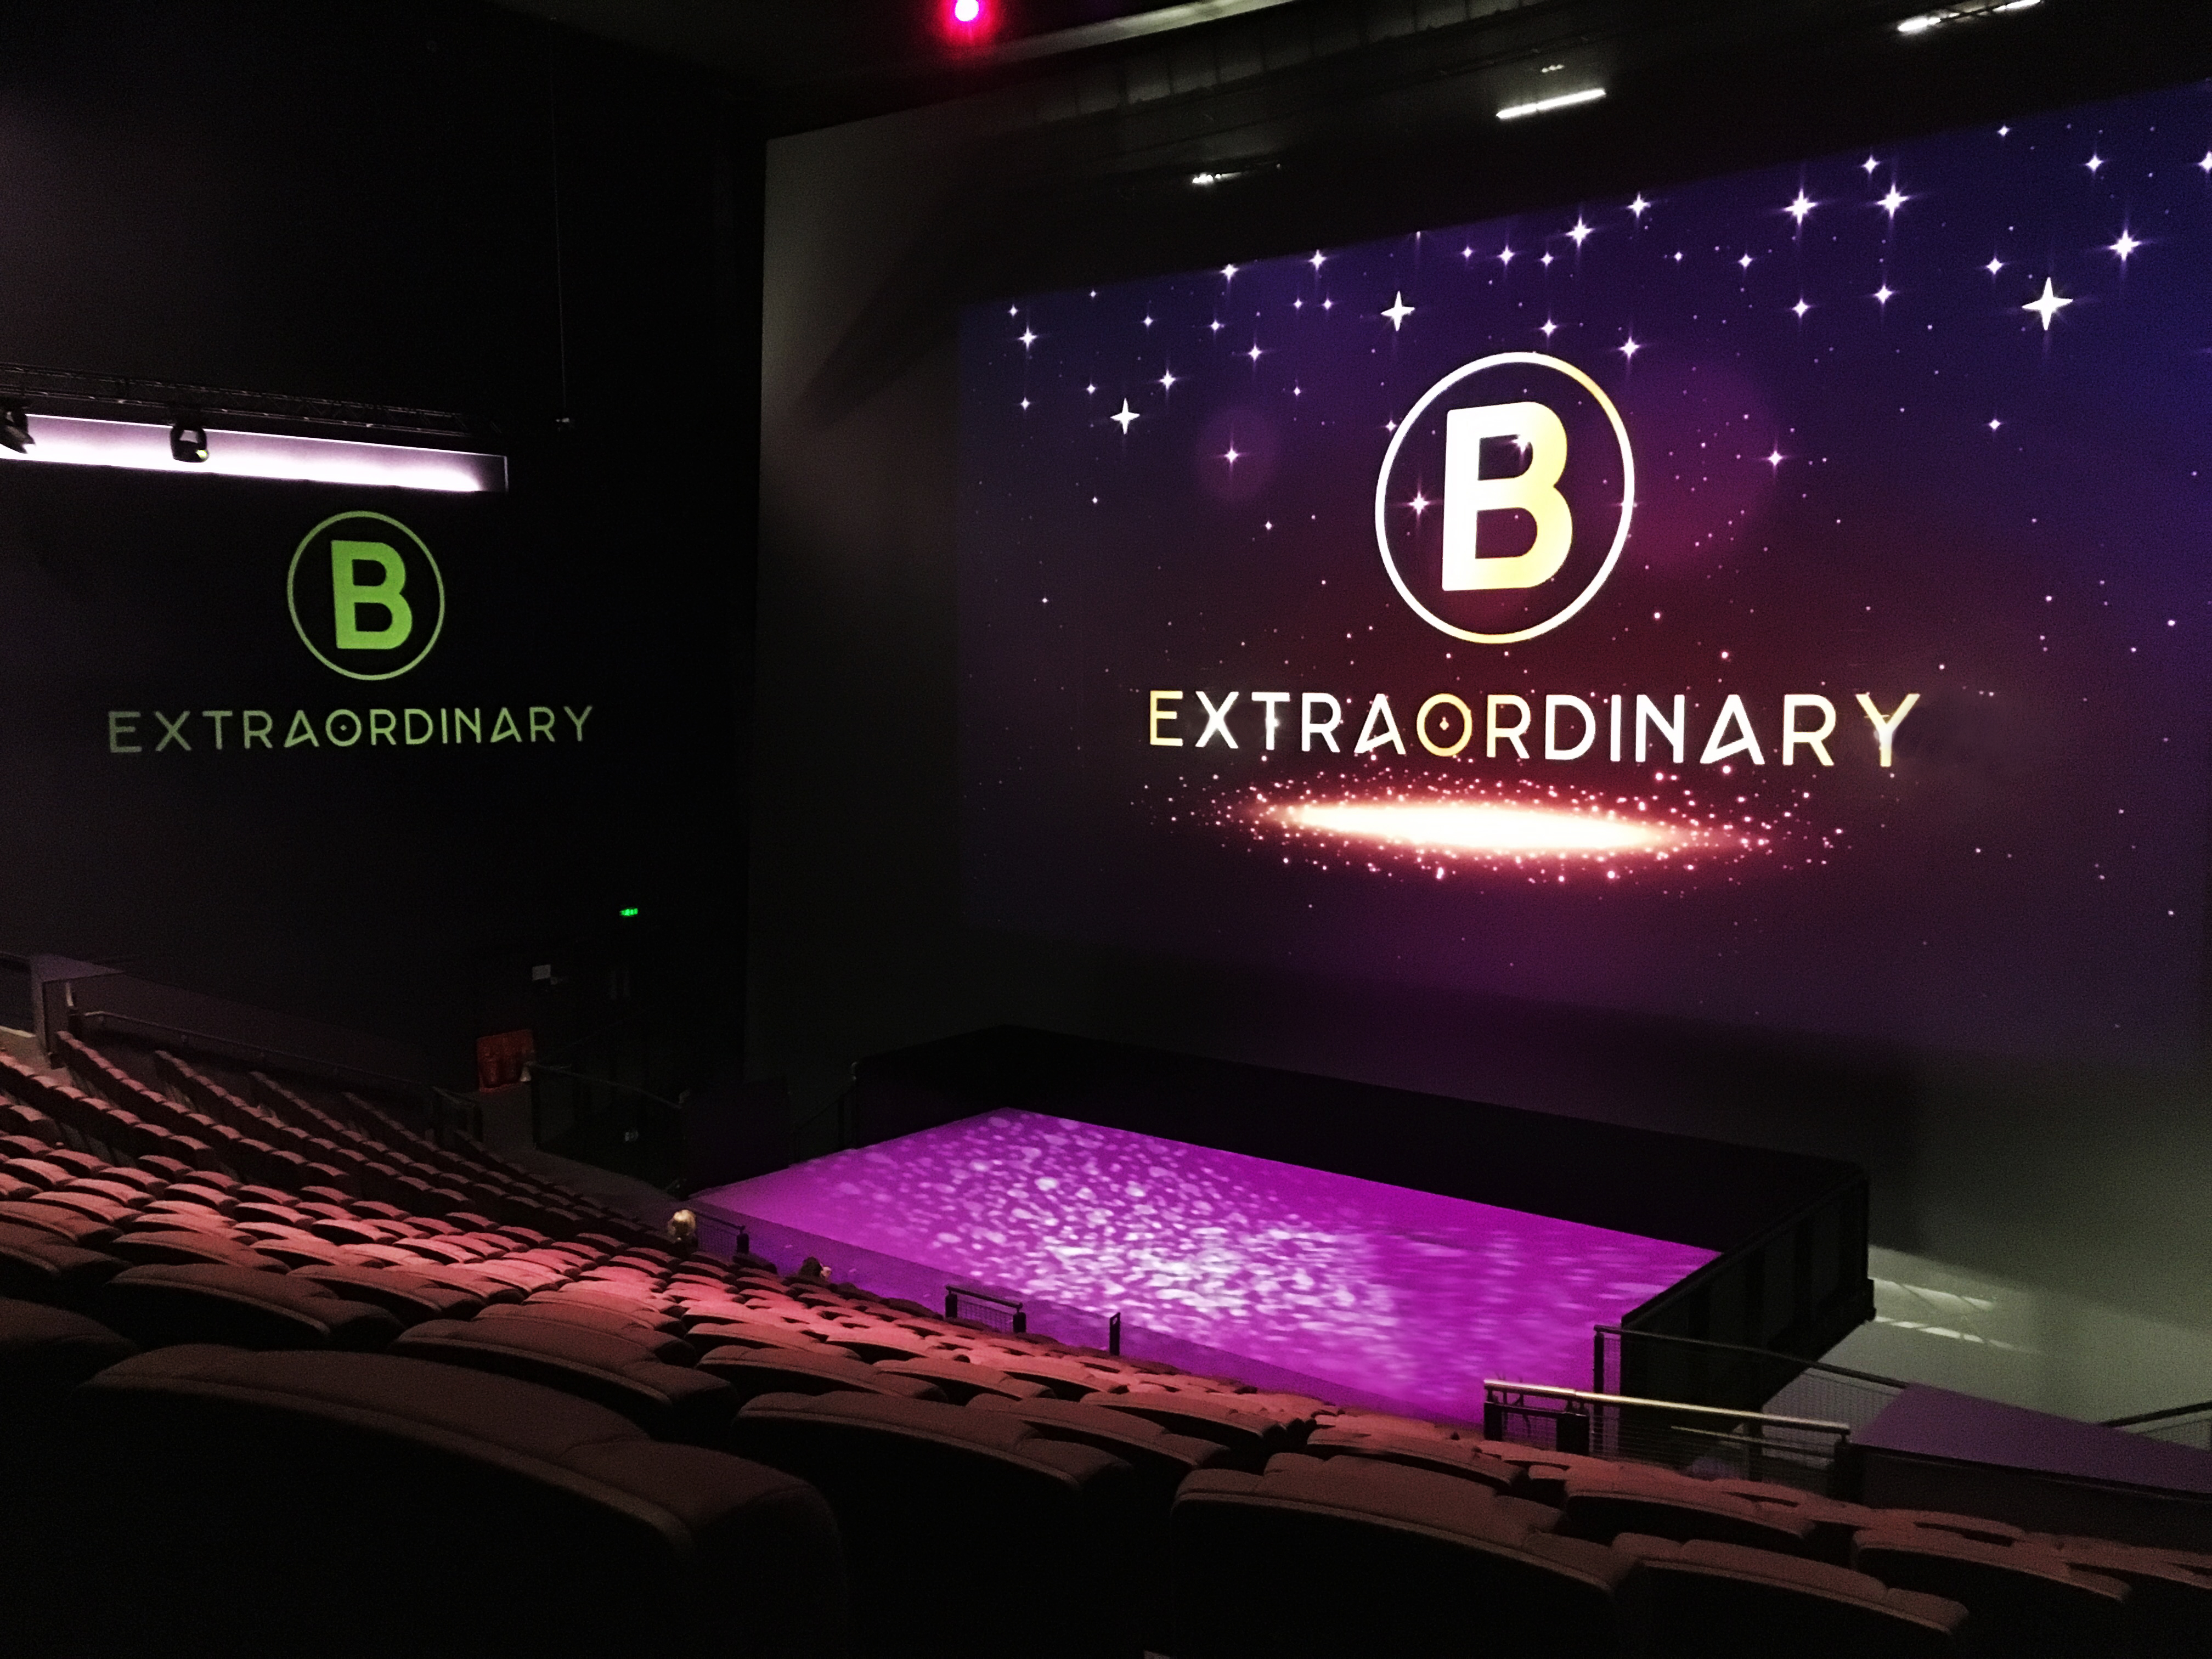 IMAX Theatre on the B Extraordinary Awards Night, 'B Extraordinary' projected on the screen and wall